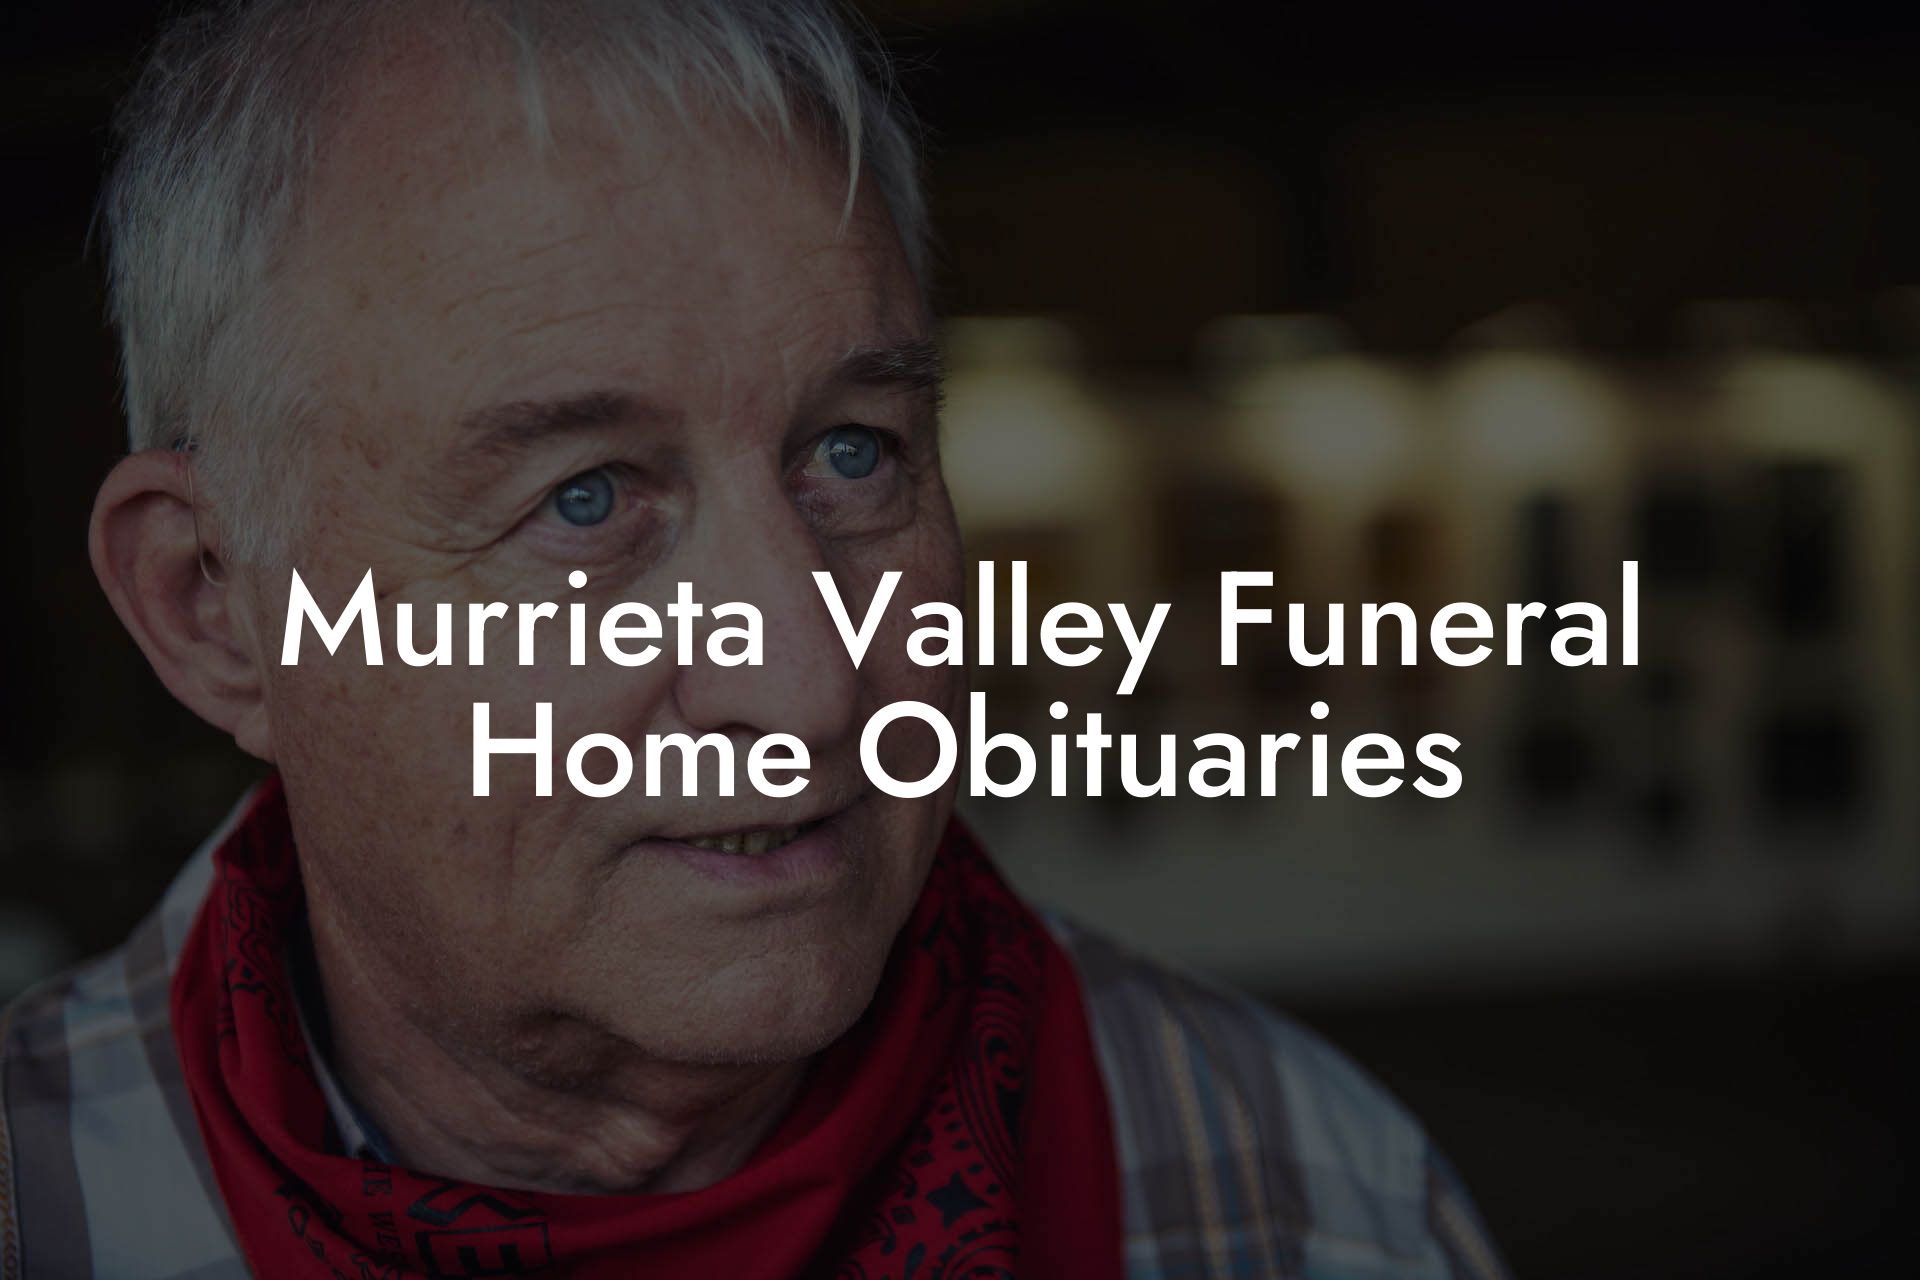 Murrieta Valley Funeral Home Obituaries